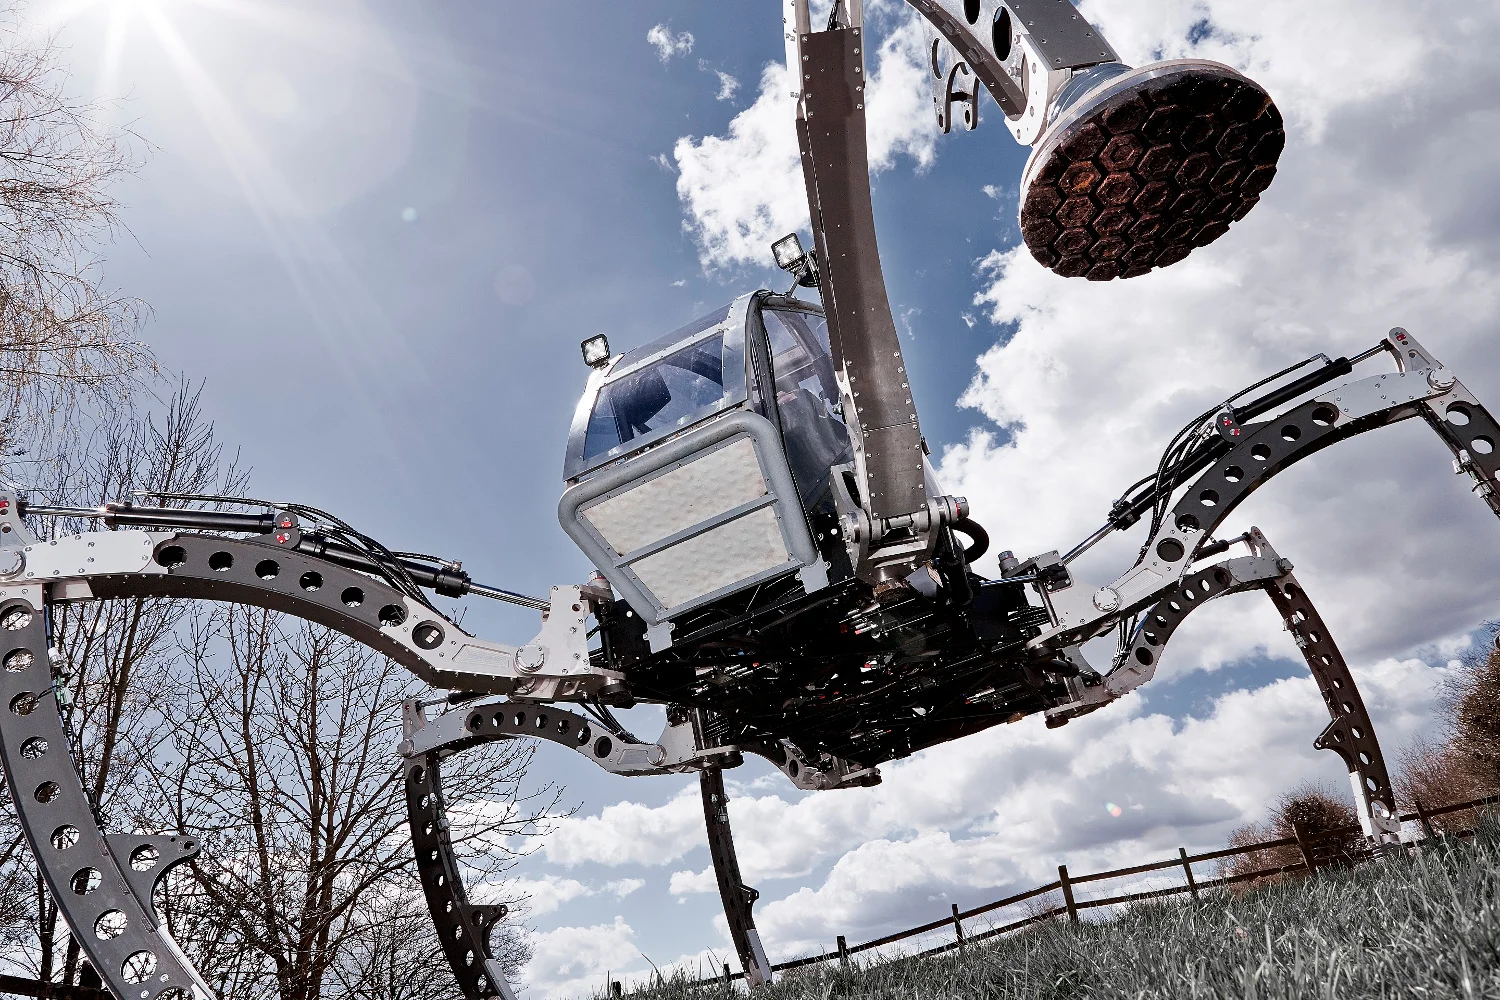 Hexapod-Mantis-Robot-Matt-Denton-Image-from-WIRED-magazine-shoot-Joe-McGorty